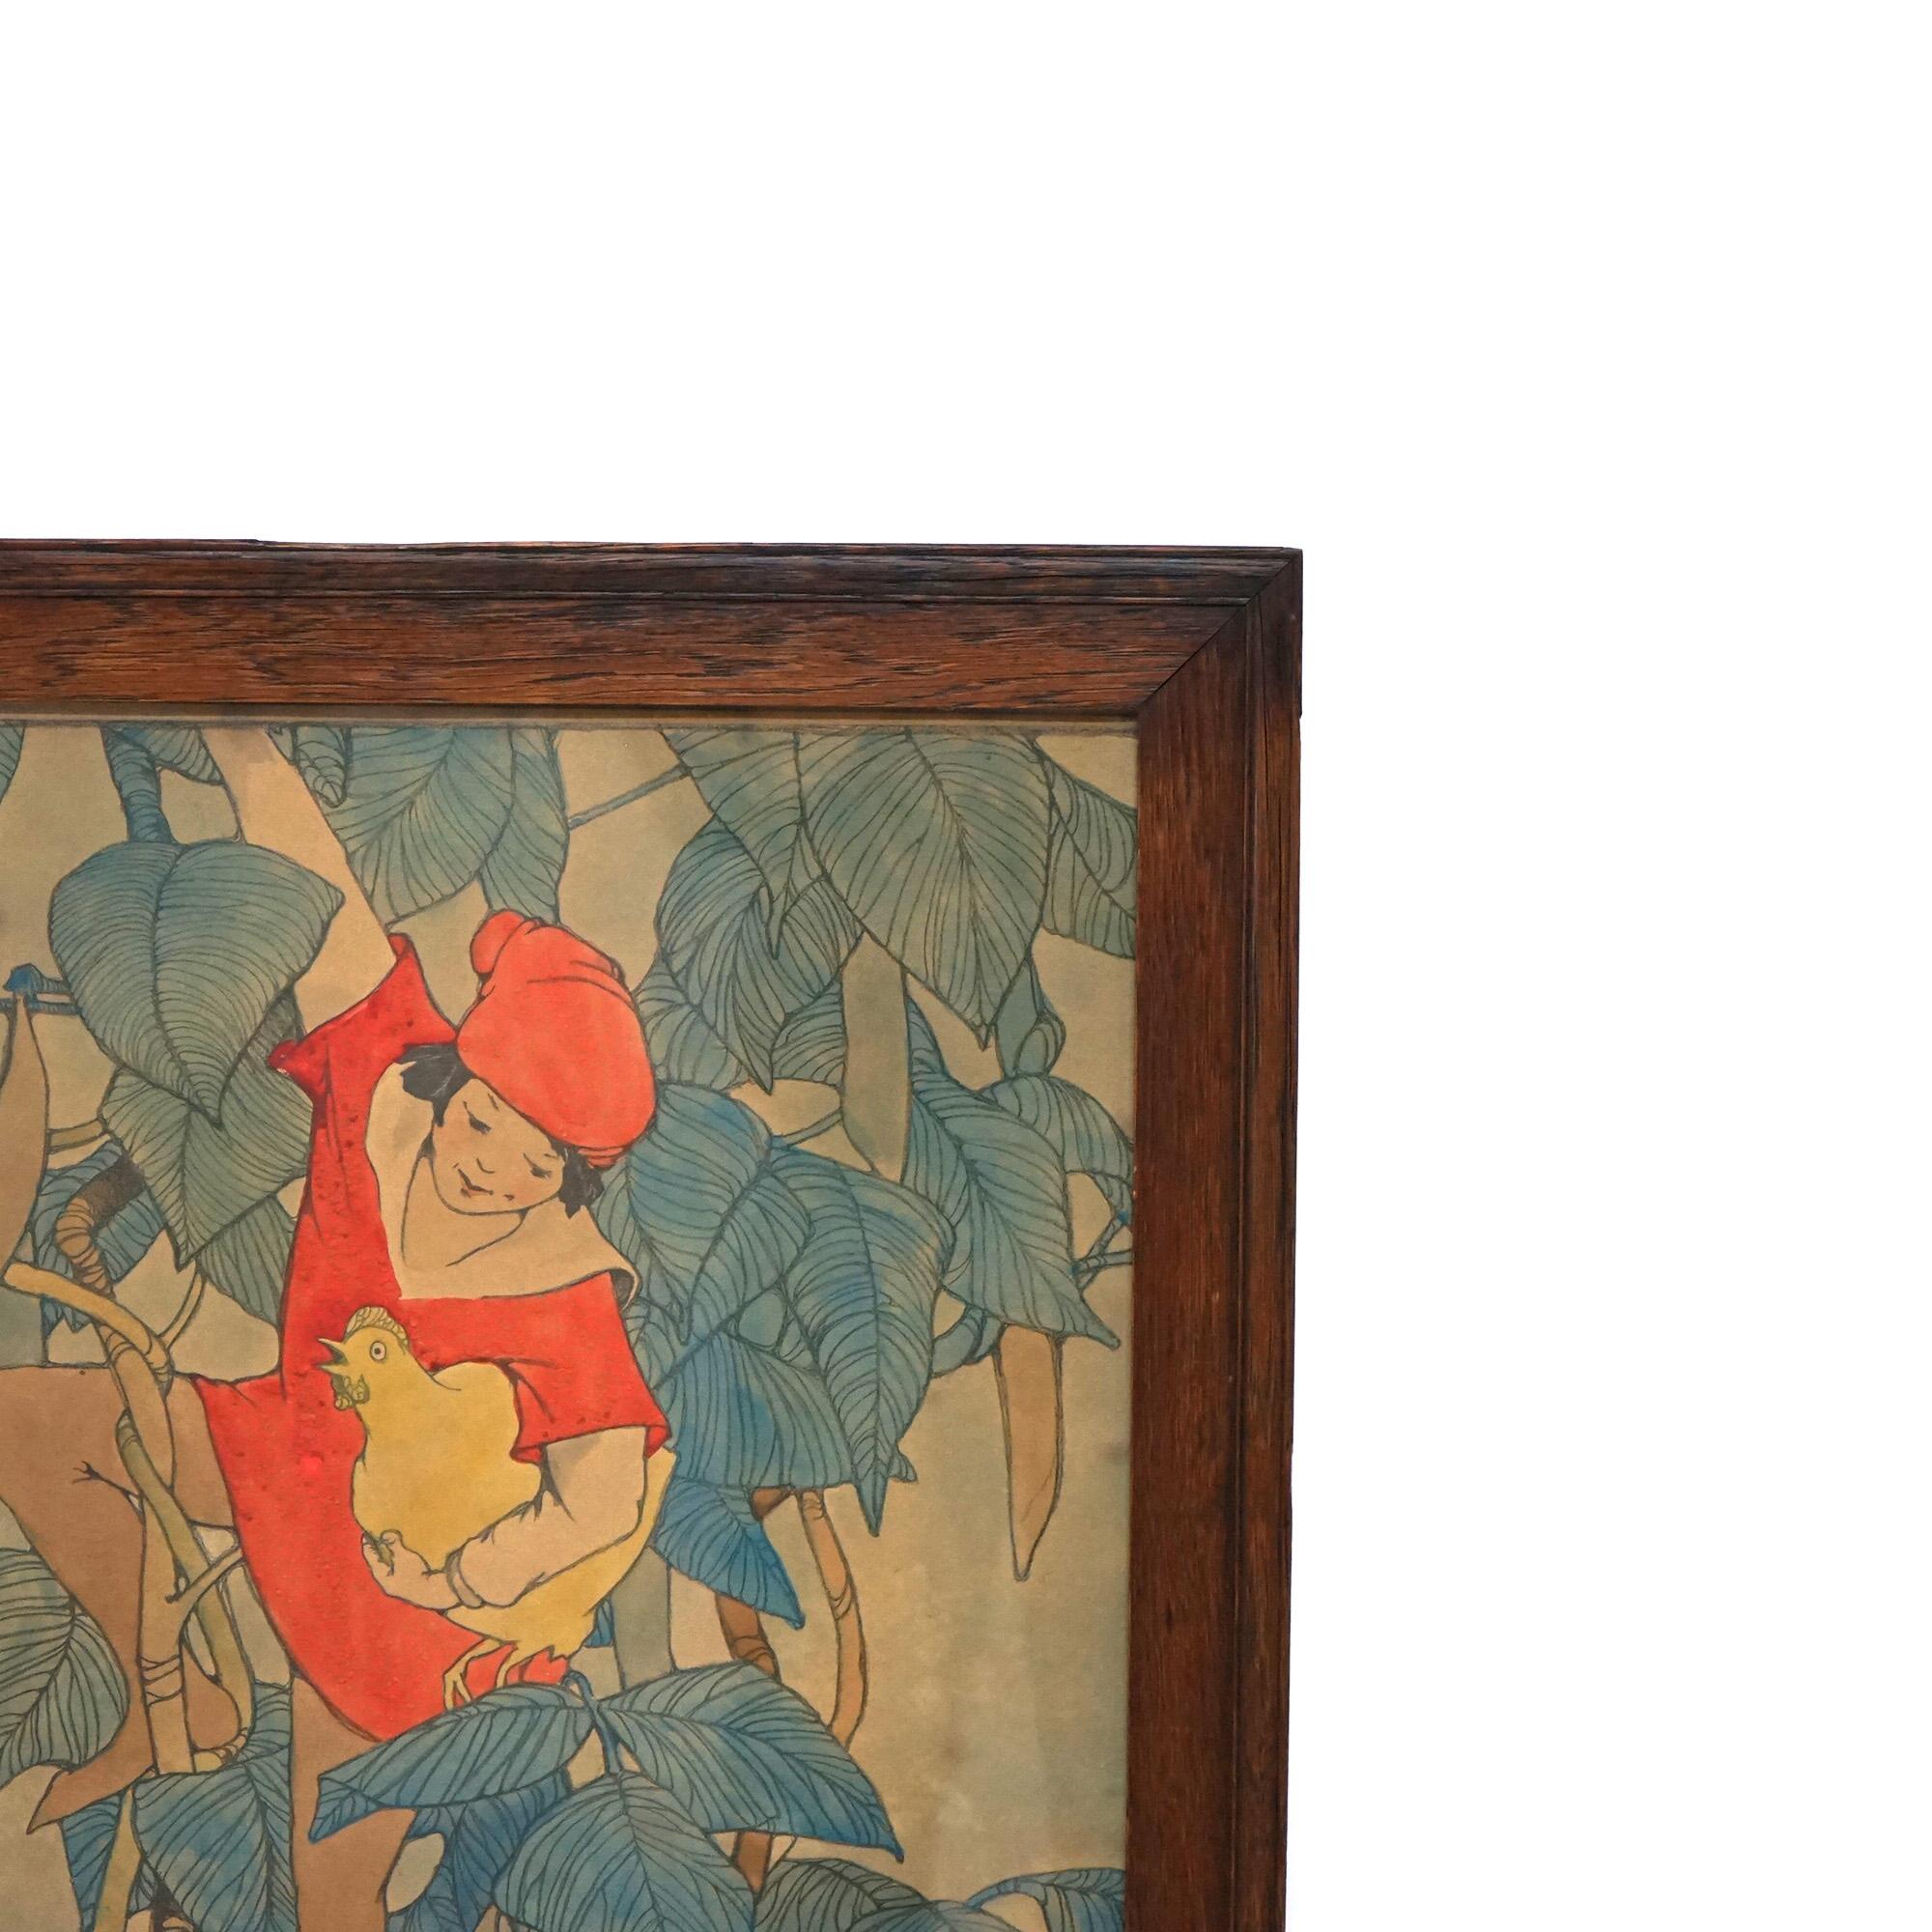 Paper Antique Elizabeth Tyler Lithograph “Jack And The Beanstalk”, Framed, C1920 For Sale